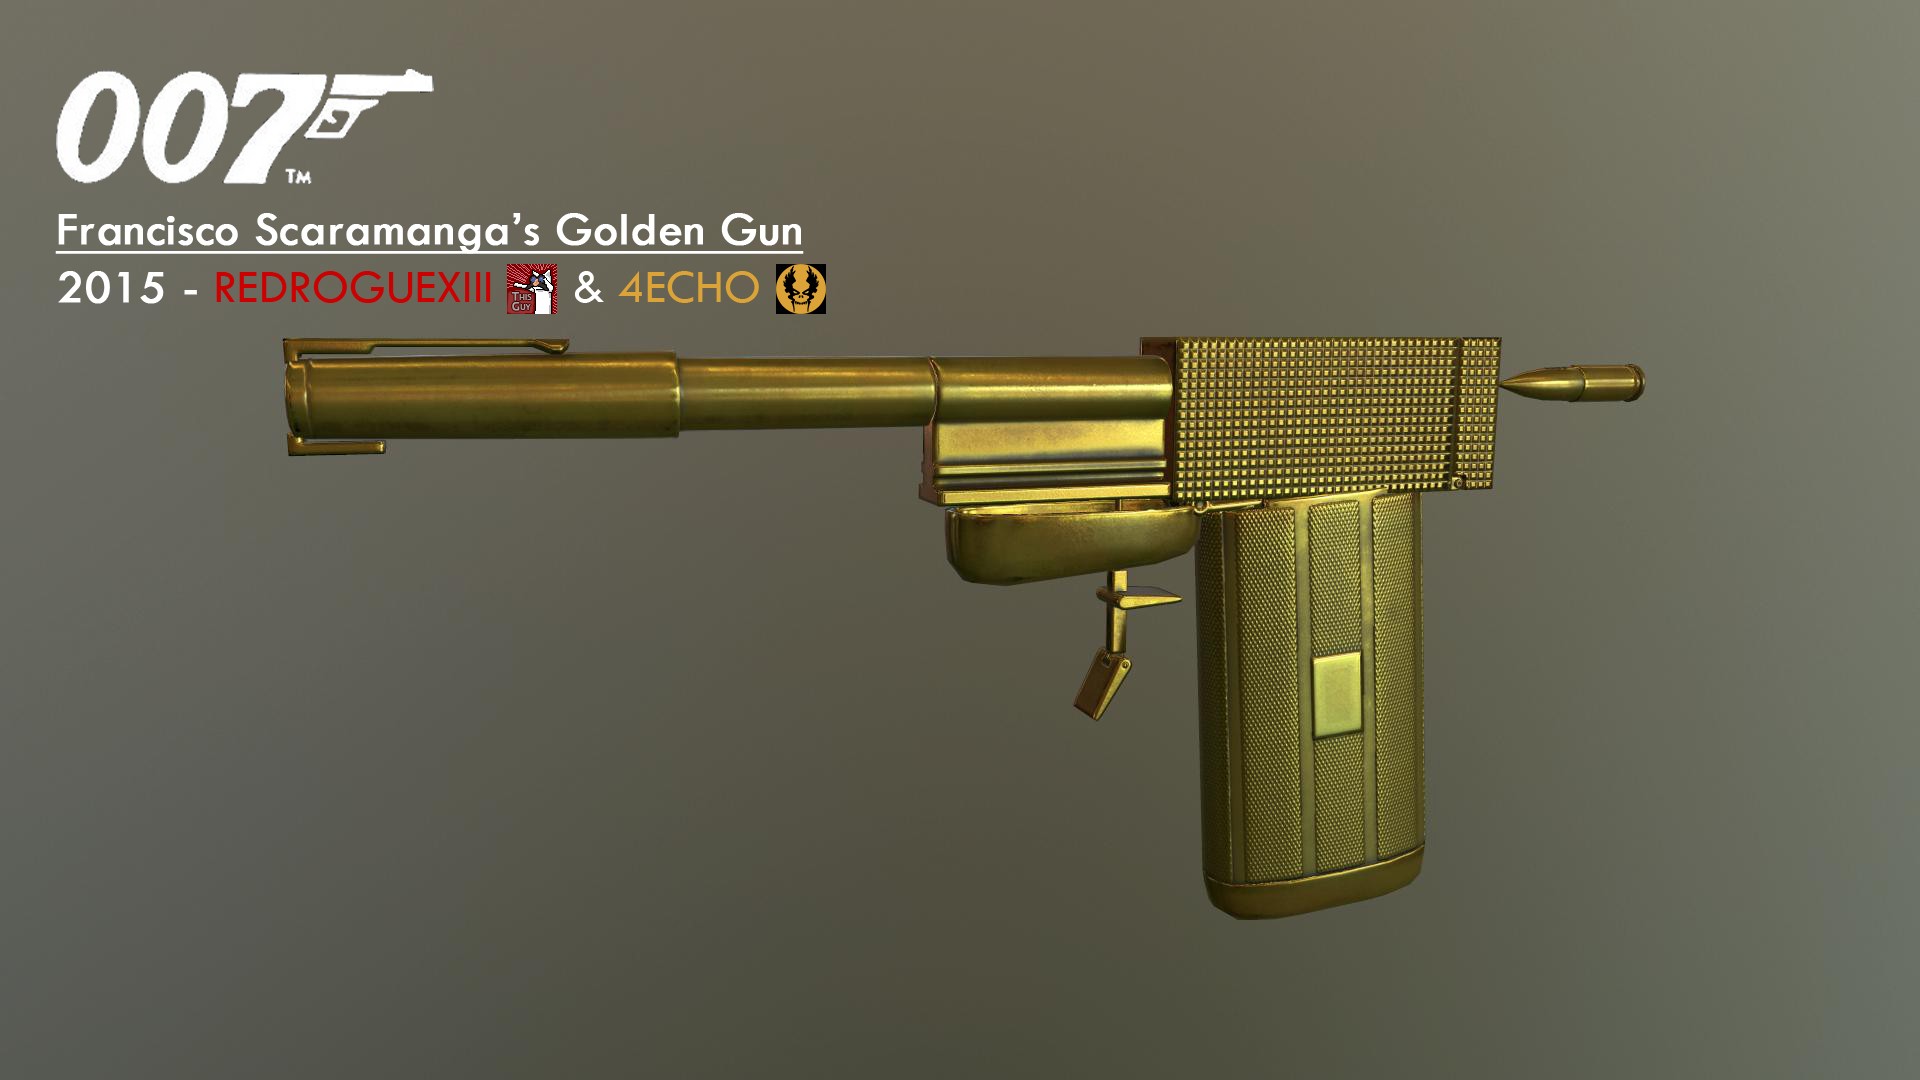 Francisco Scaramanga's Golden Gun (Models > Pistols) - GAMEBANANA